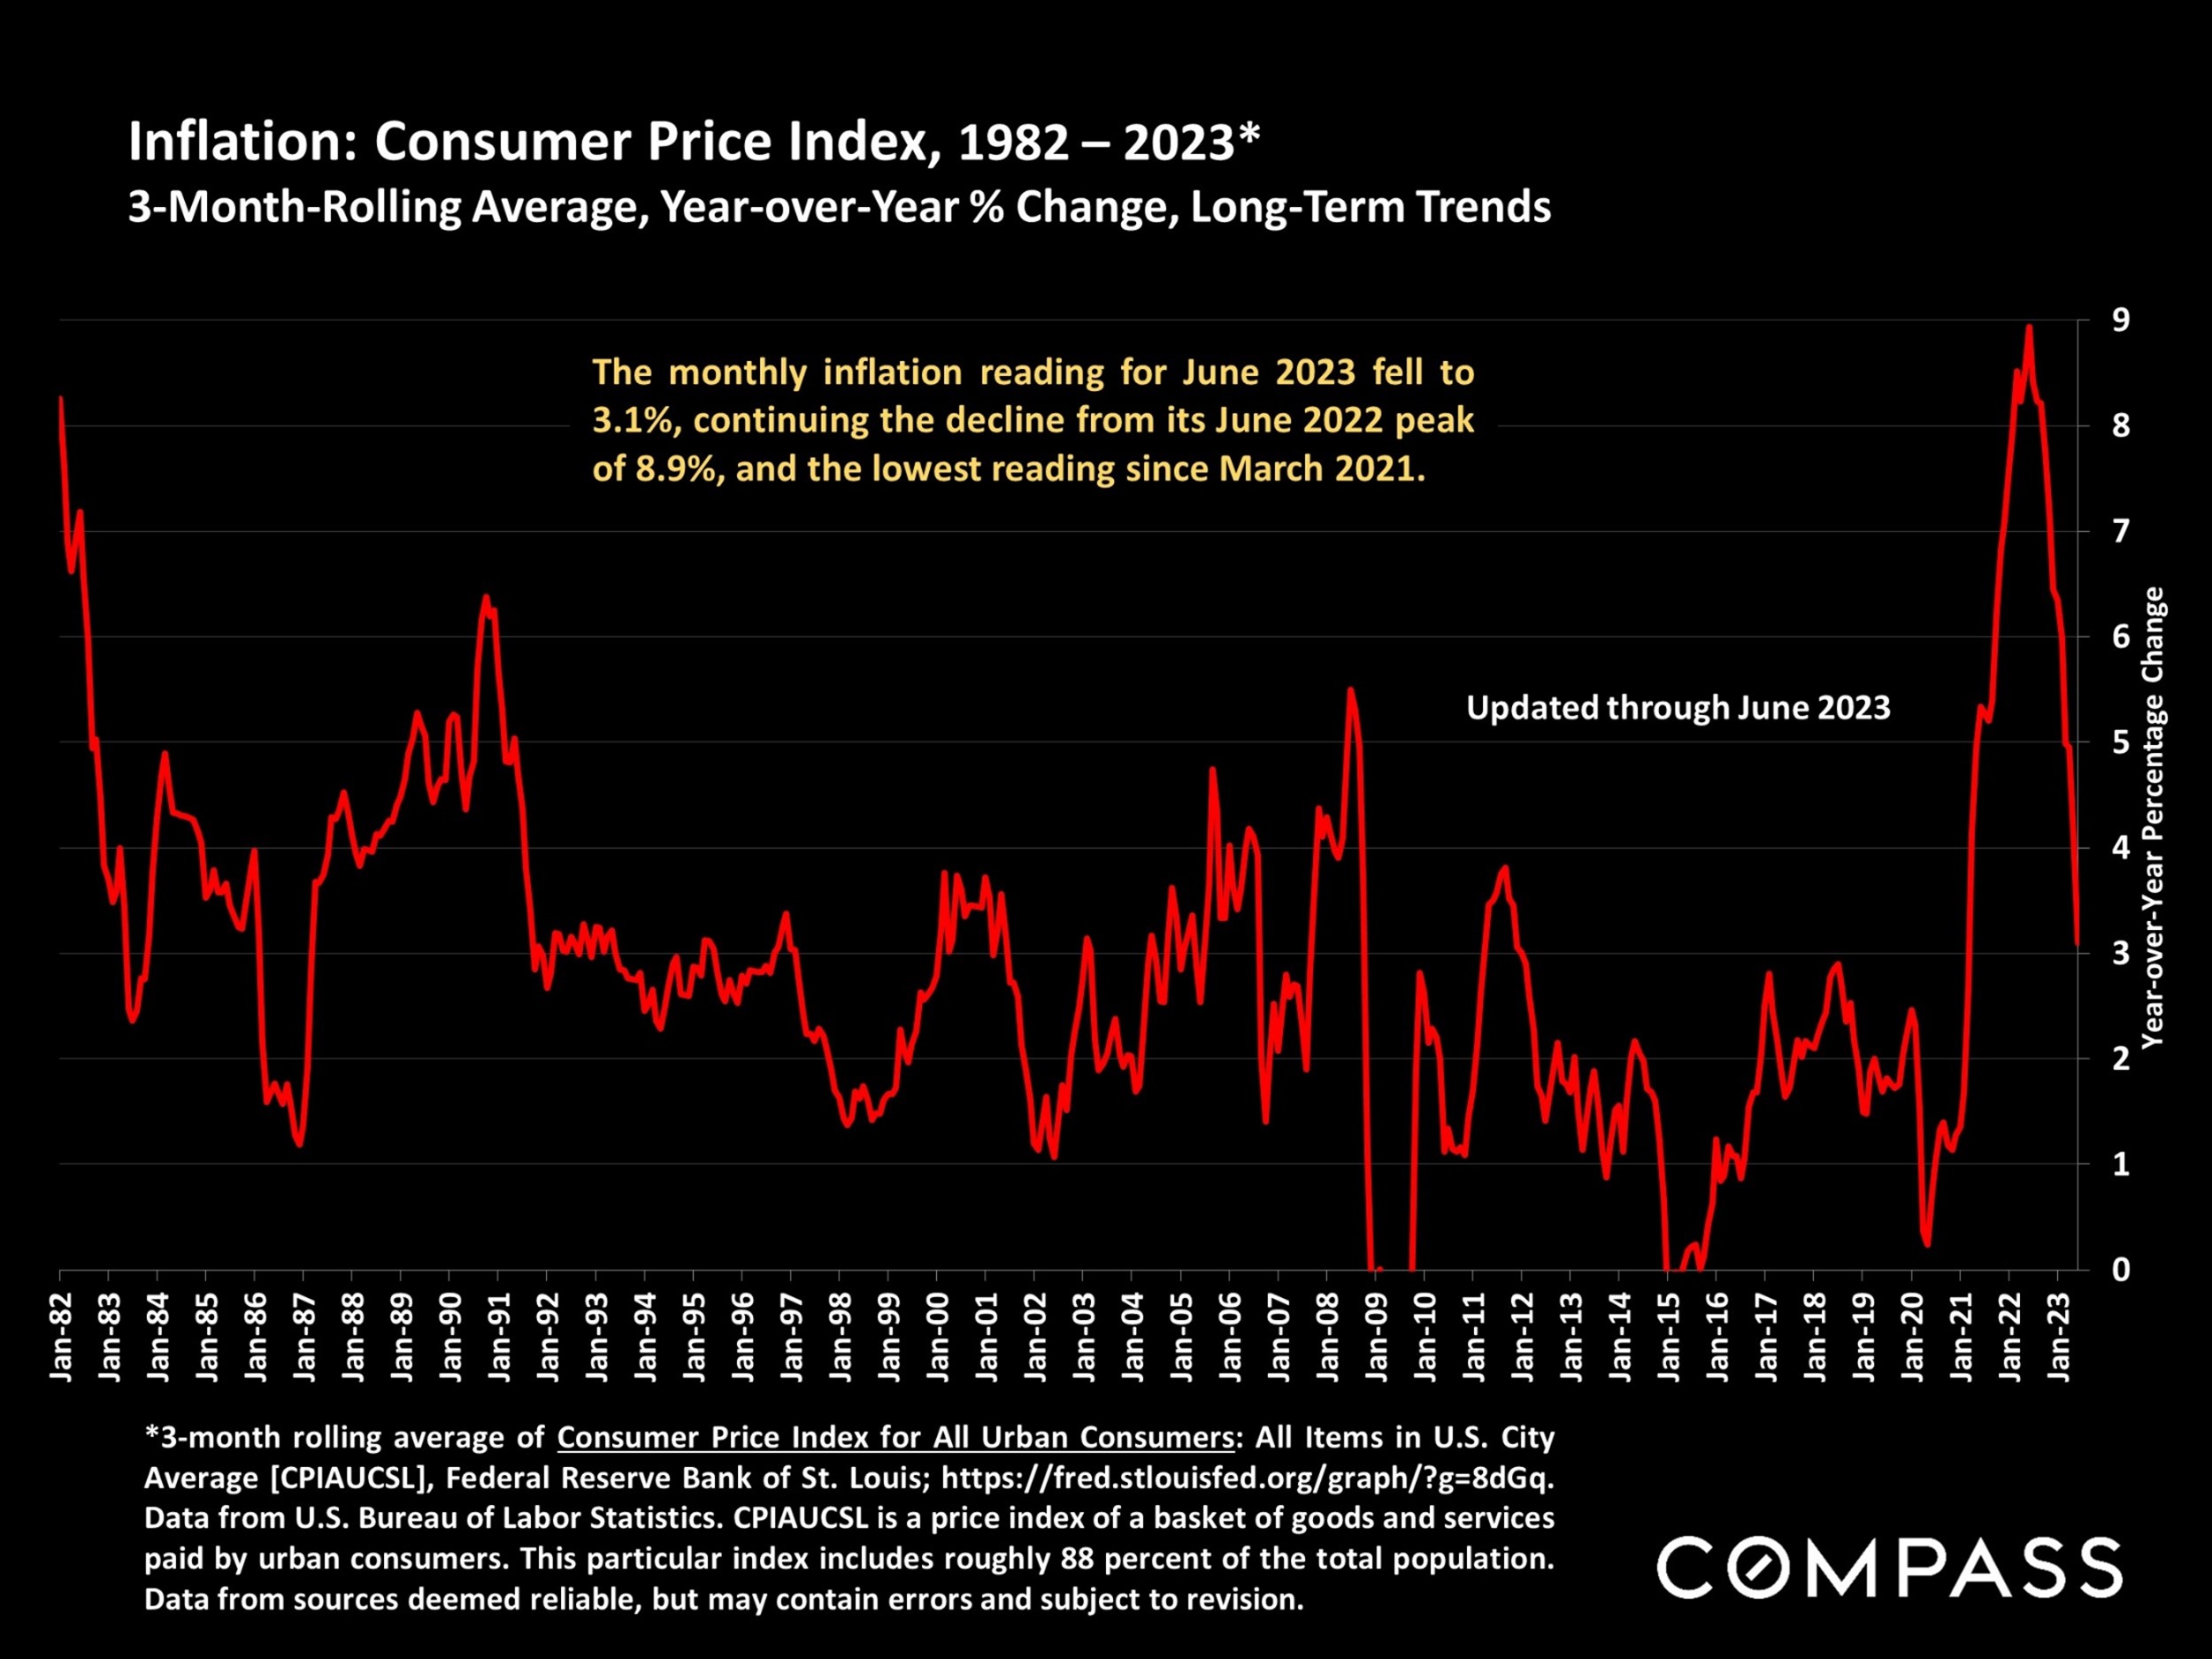 Inflation: Consumer Price Index, 1982 - 2023*